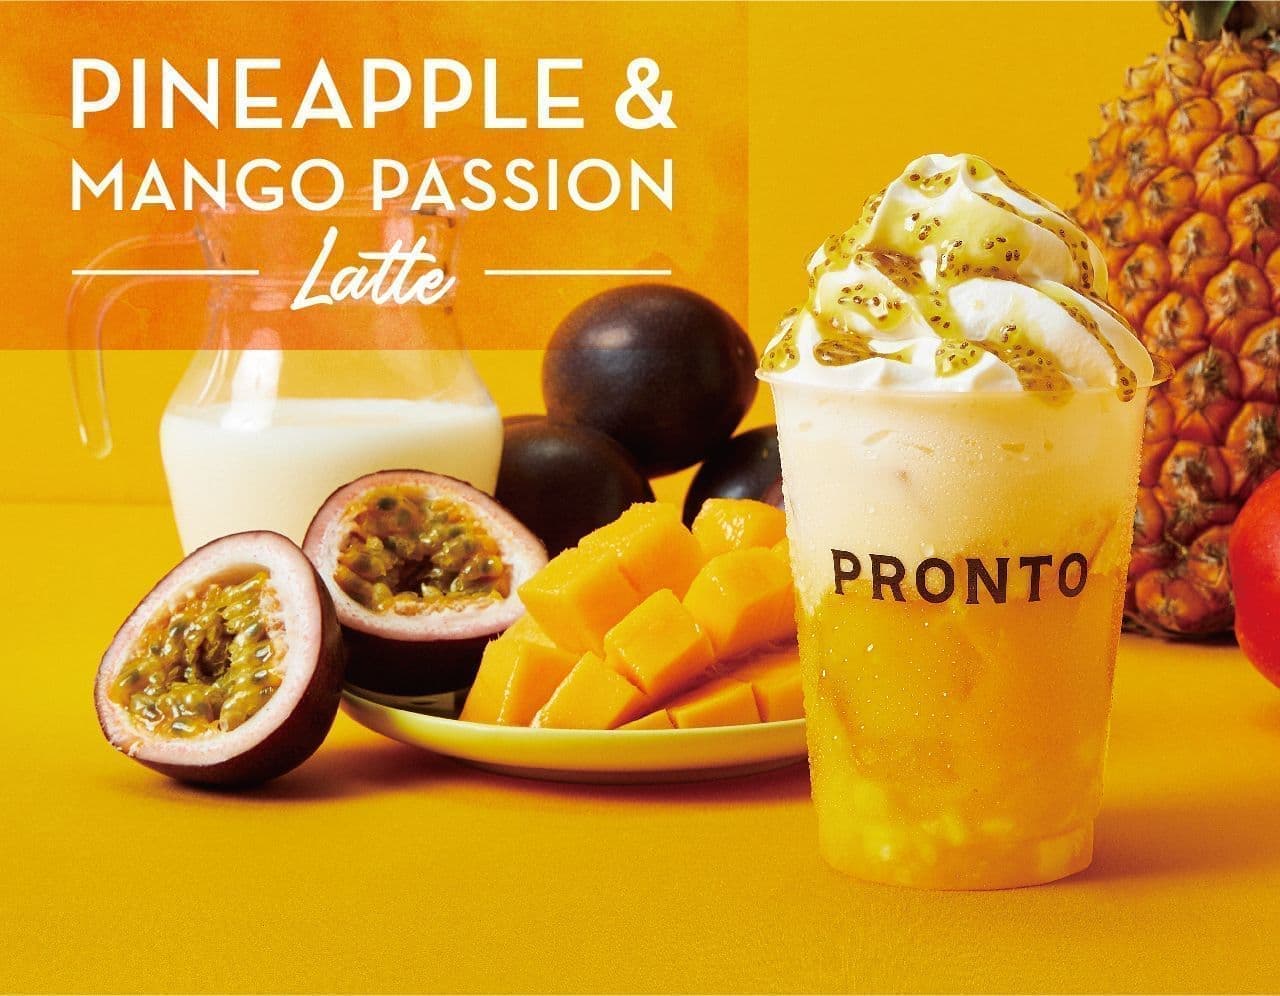 PRONTO "Taiwan Pine & Mango Passion Latte"